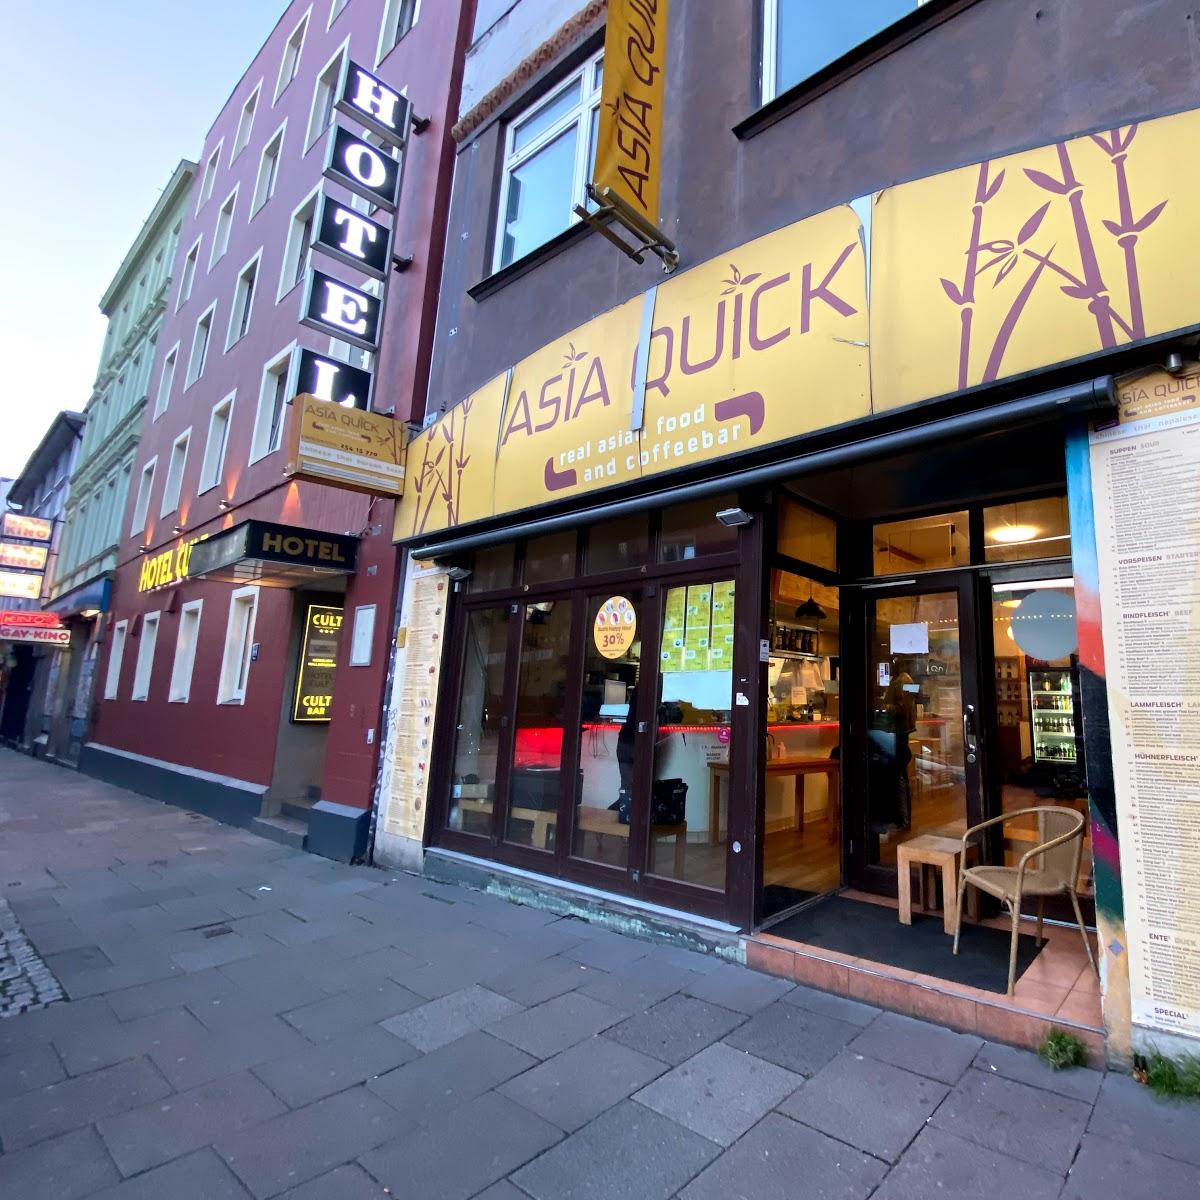 Restaurant "AsiaQuick" in Hamburg